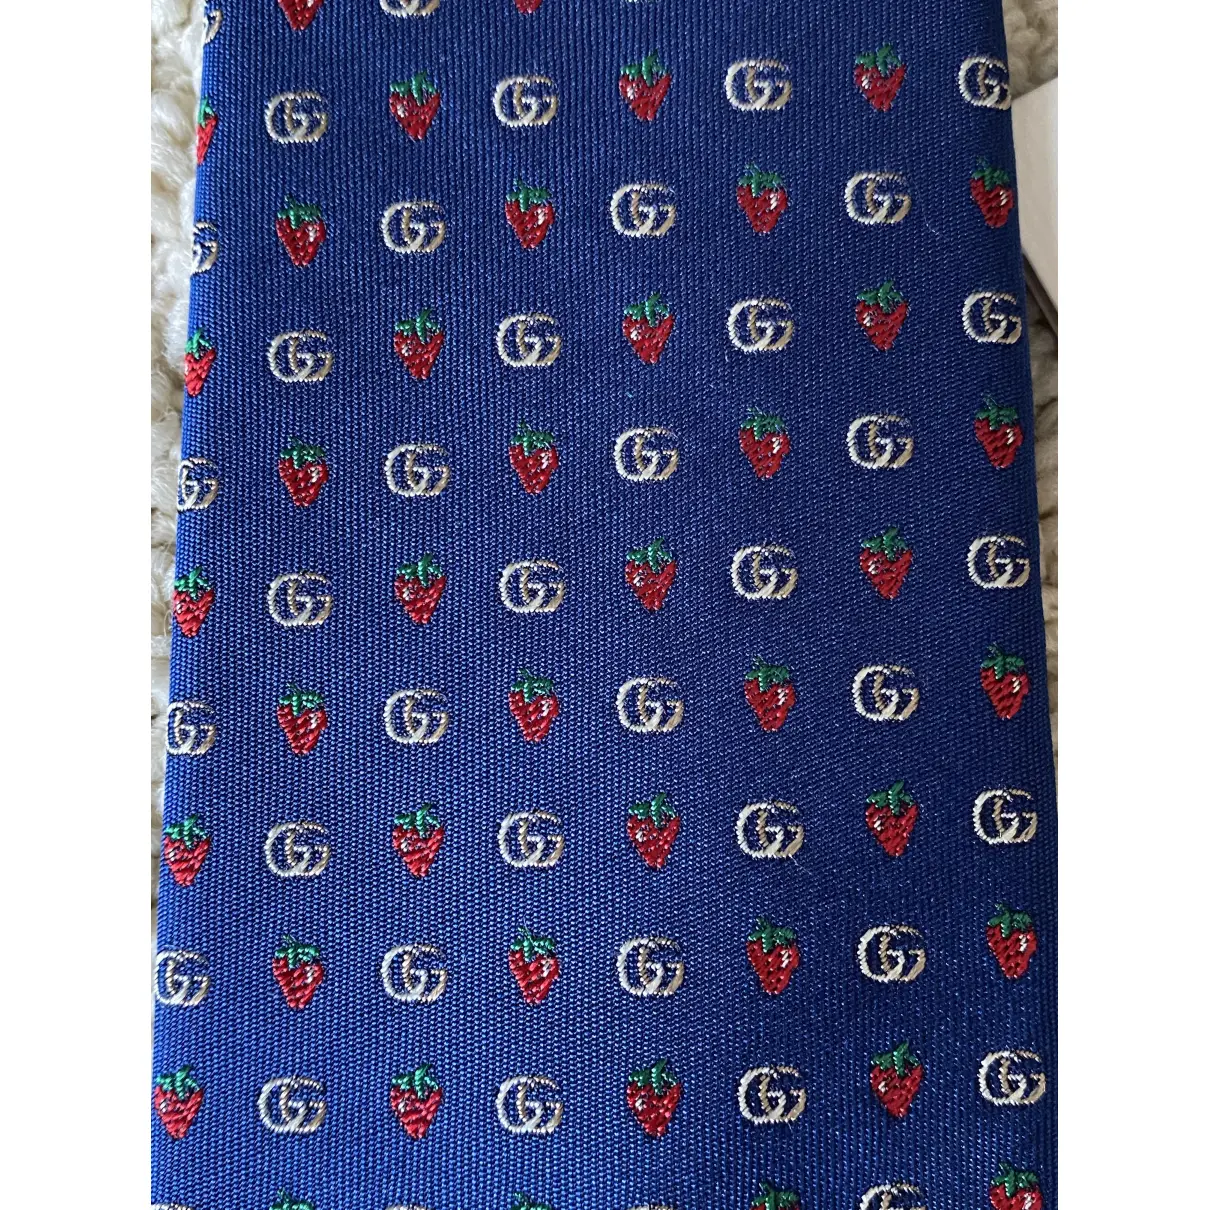 Buy Gucci Silk tie online